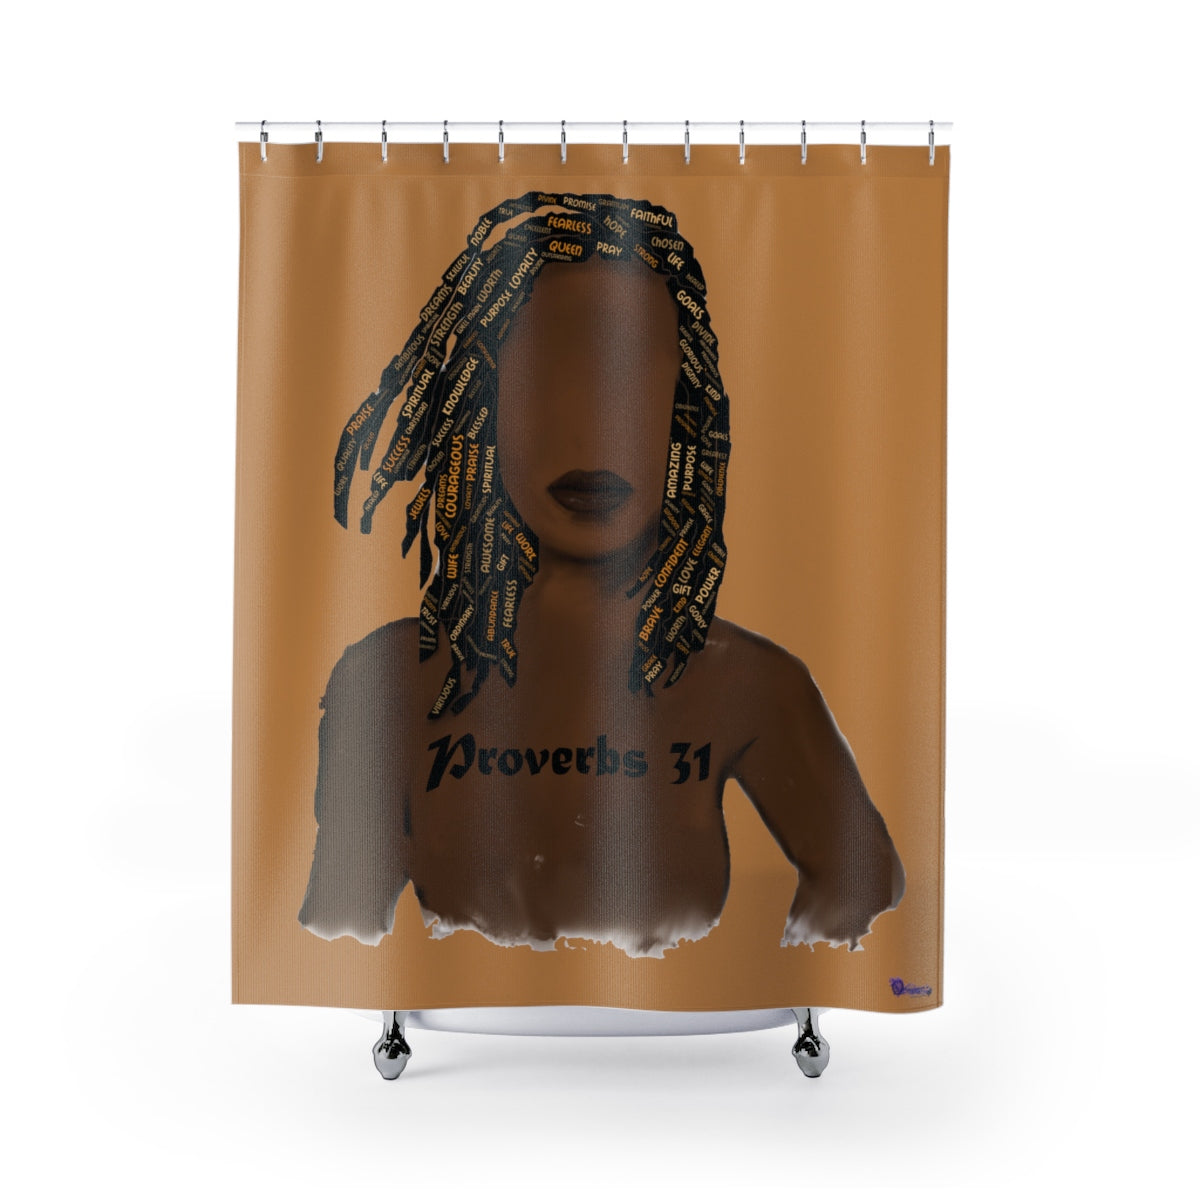 Proverbs 31 Locs Shower Curtains - Obsidian's LLC